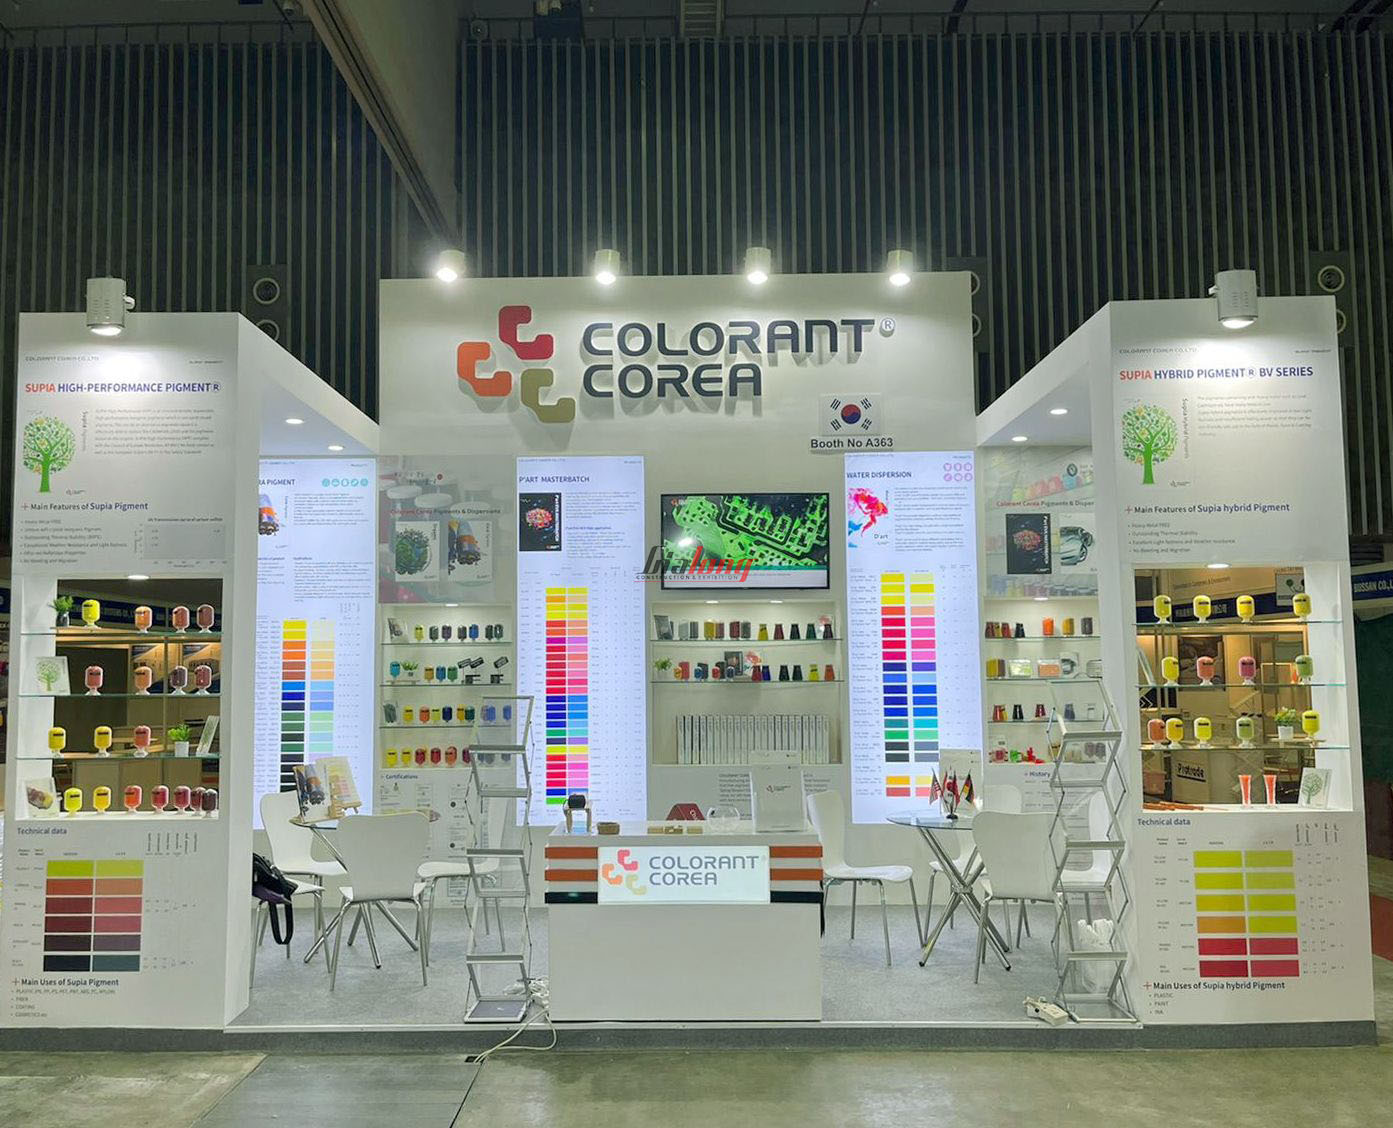 Thiết kế thi công gian hàng Colorant Corea được thực hiện bởi Gia Long - Colorant Corea booth design and construction is done by Gia Long